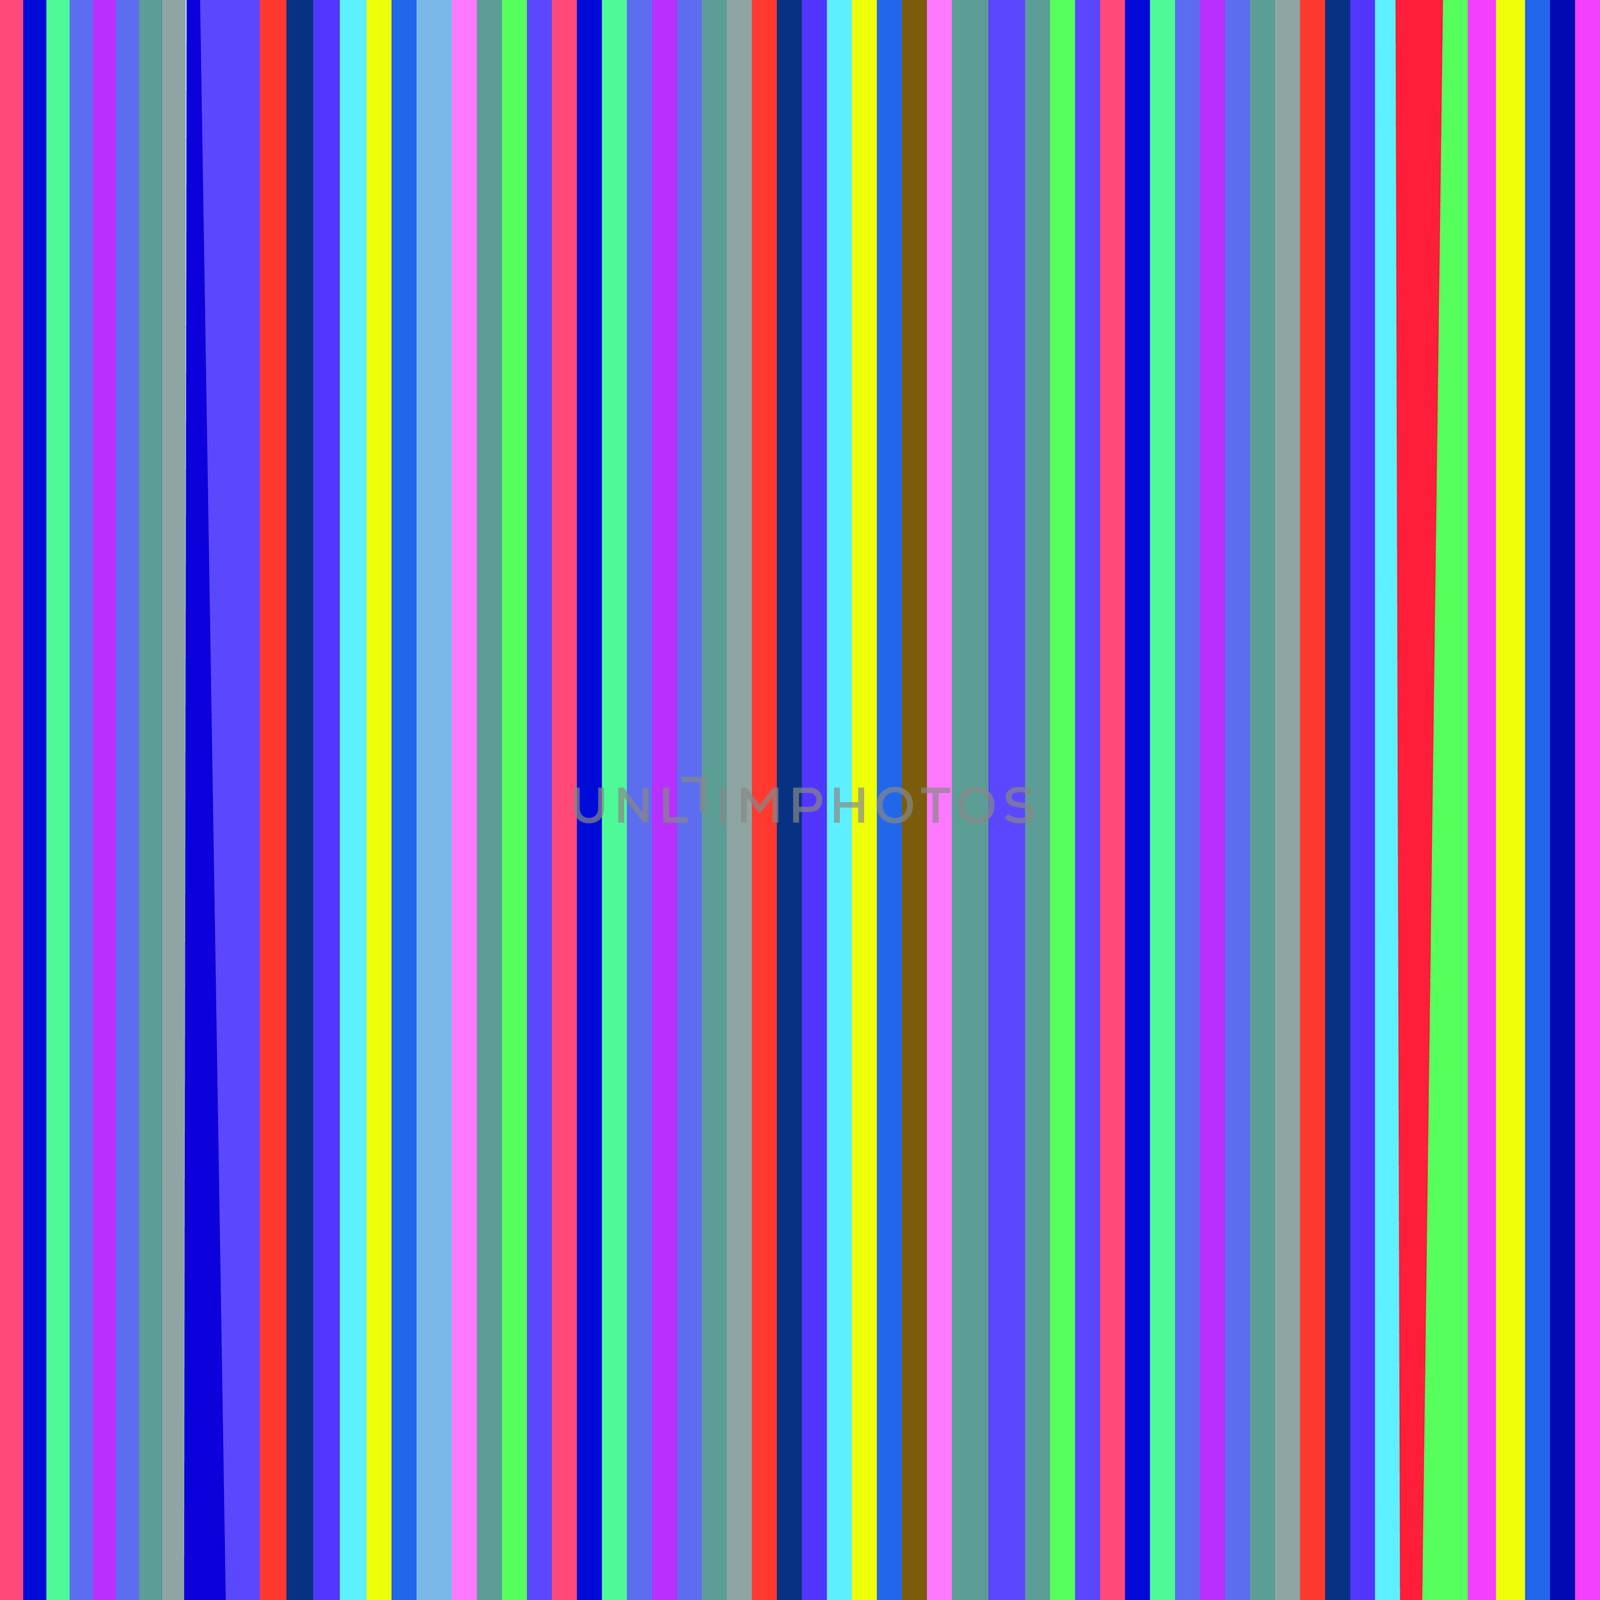 Stripes 2 by robertosch